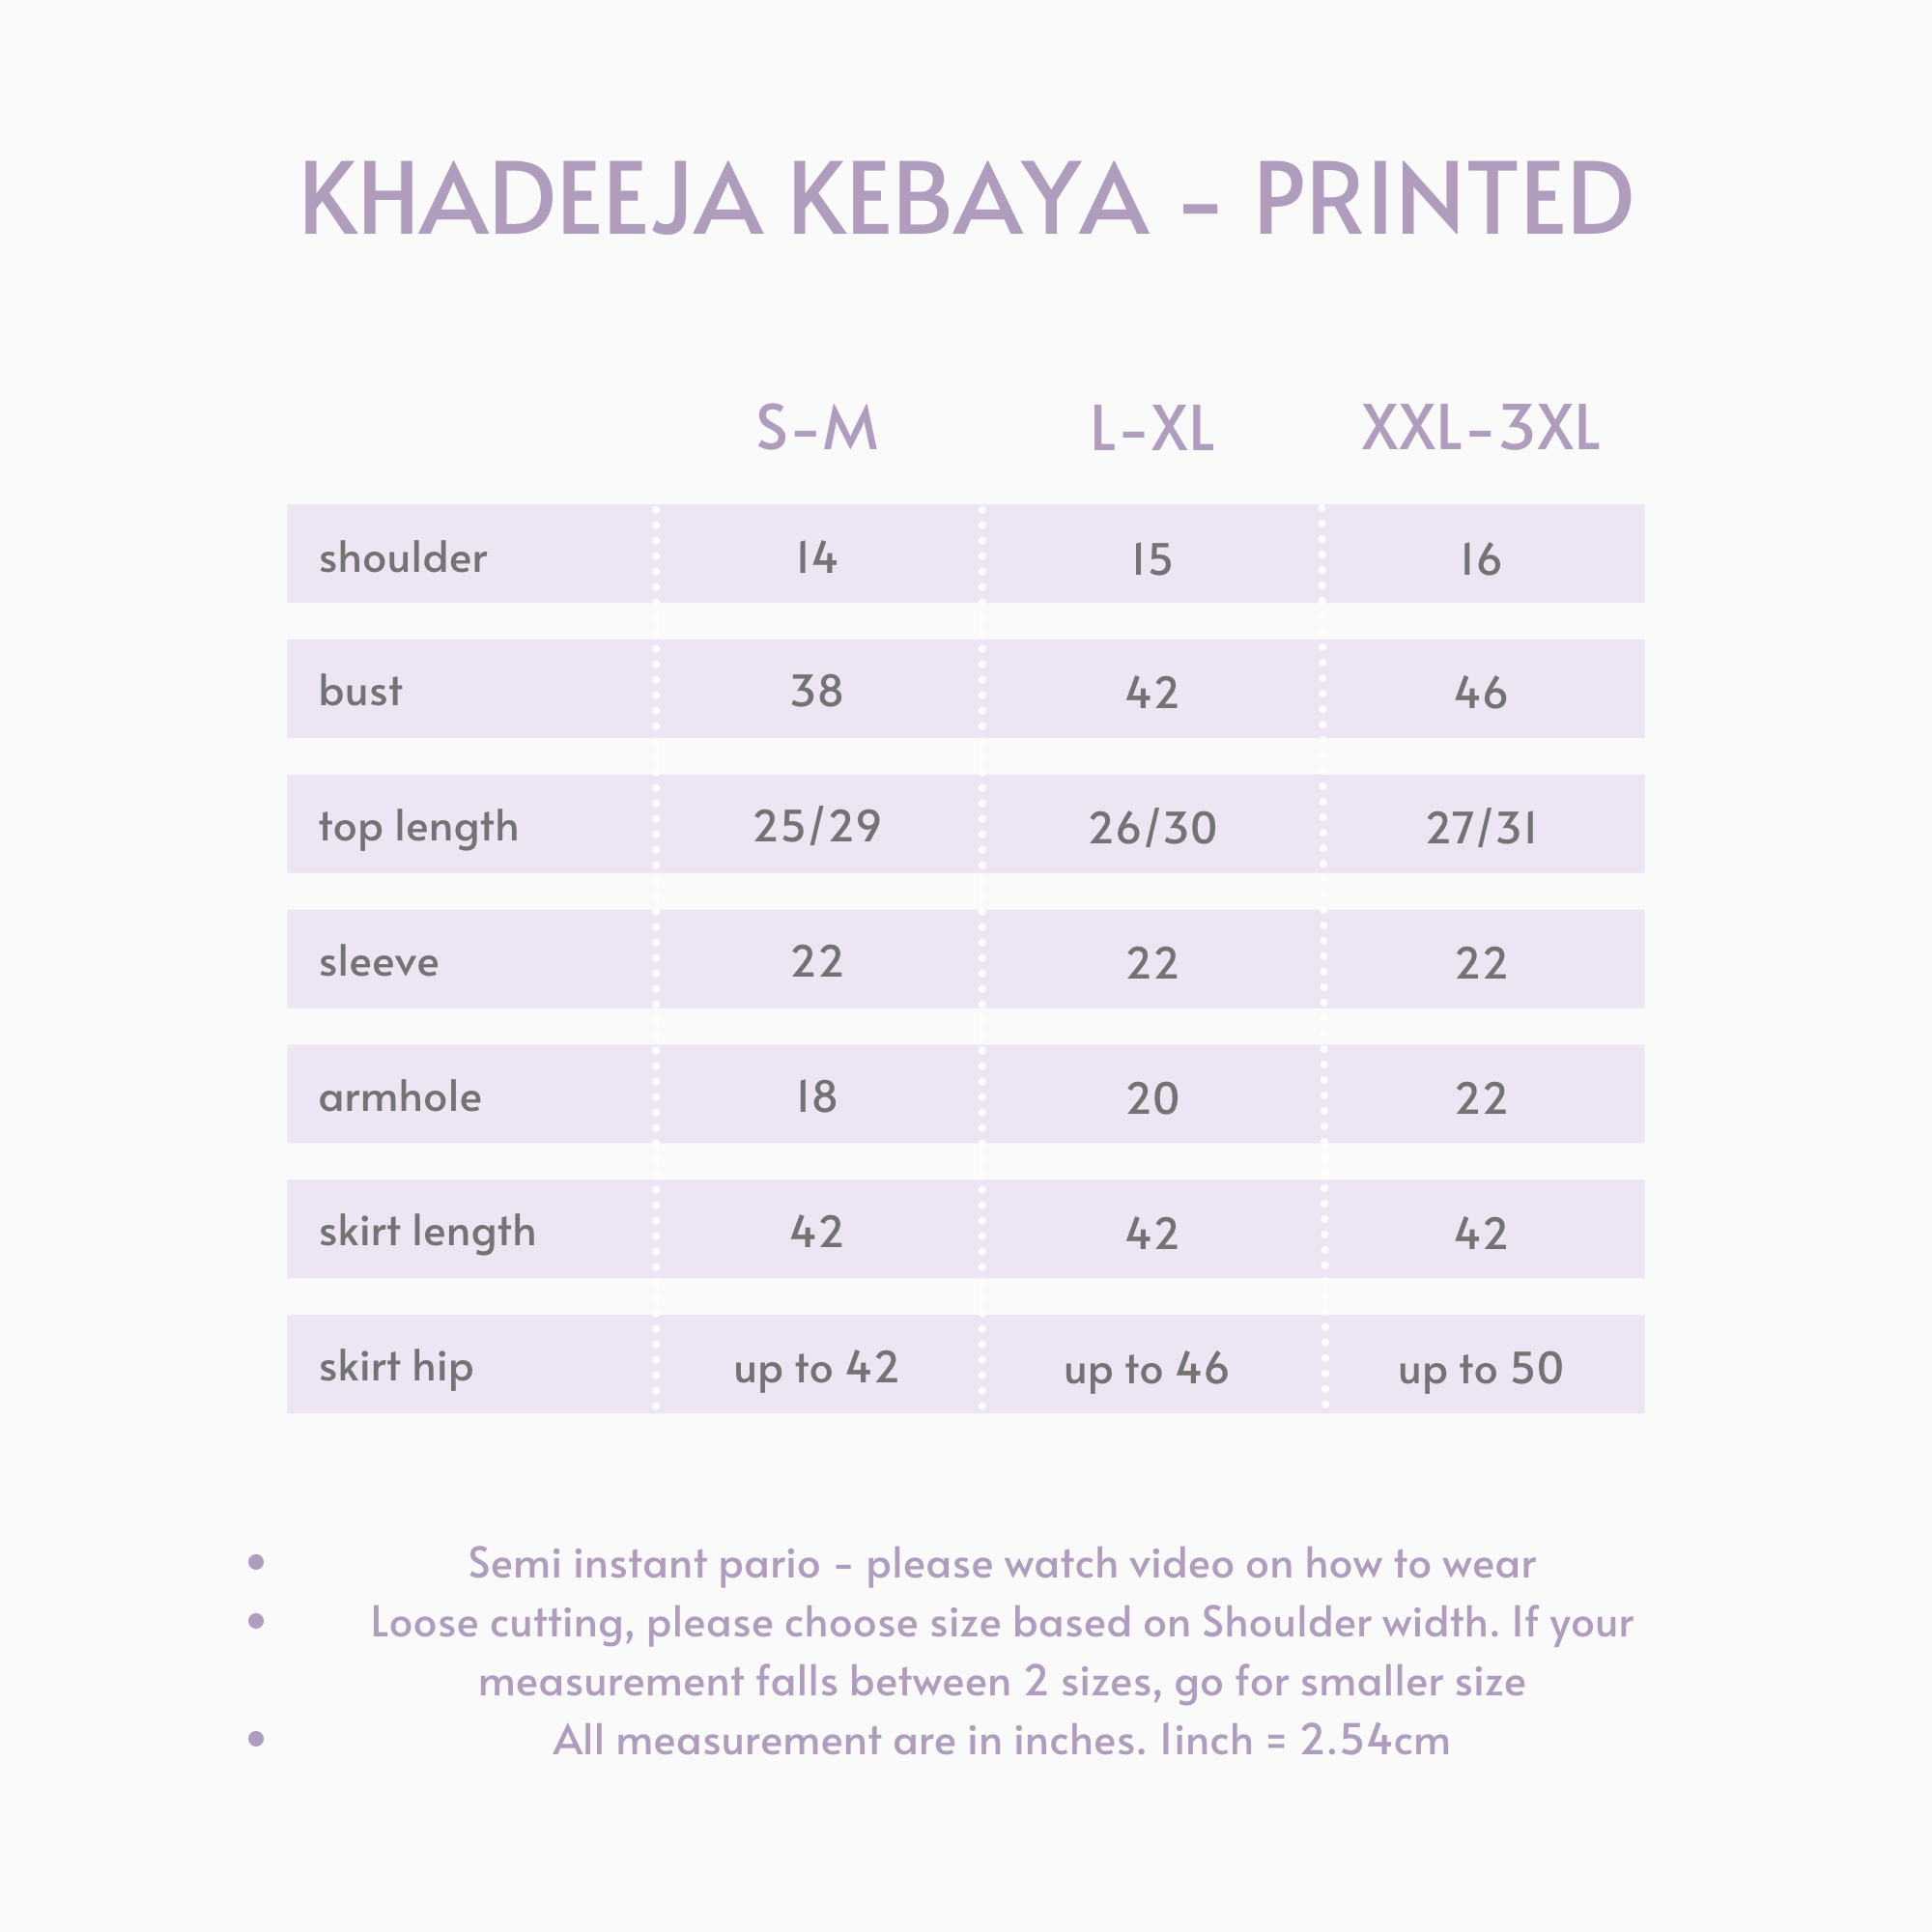 khadeeja printed chart